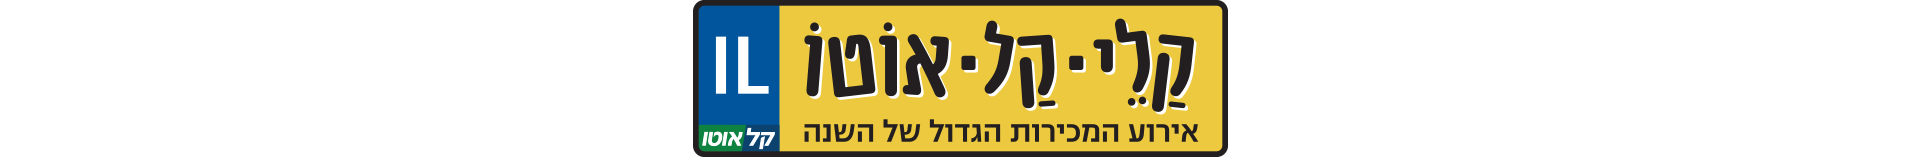 Image - campaign logo